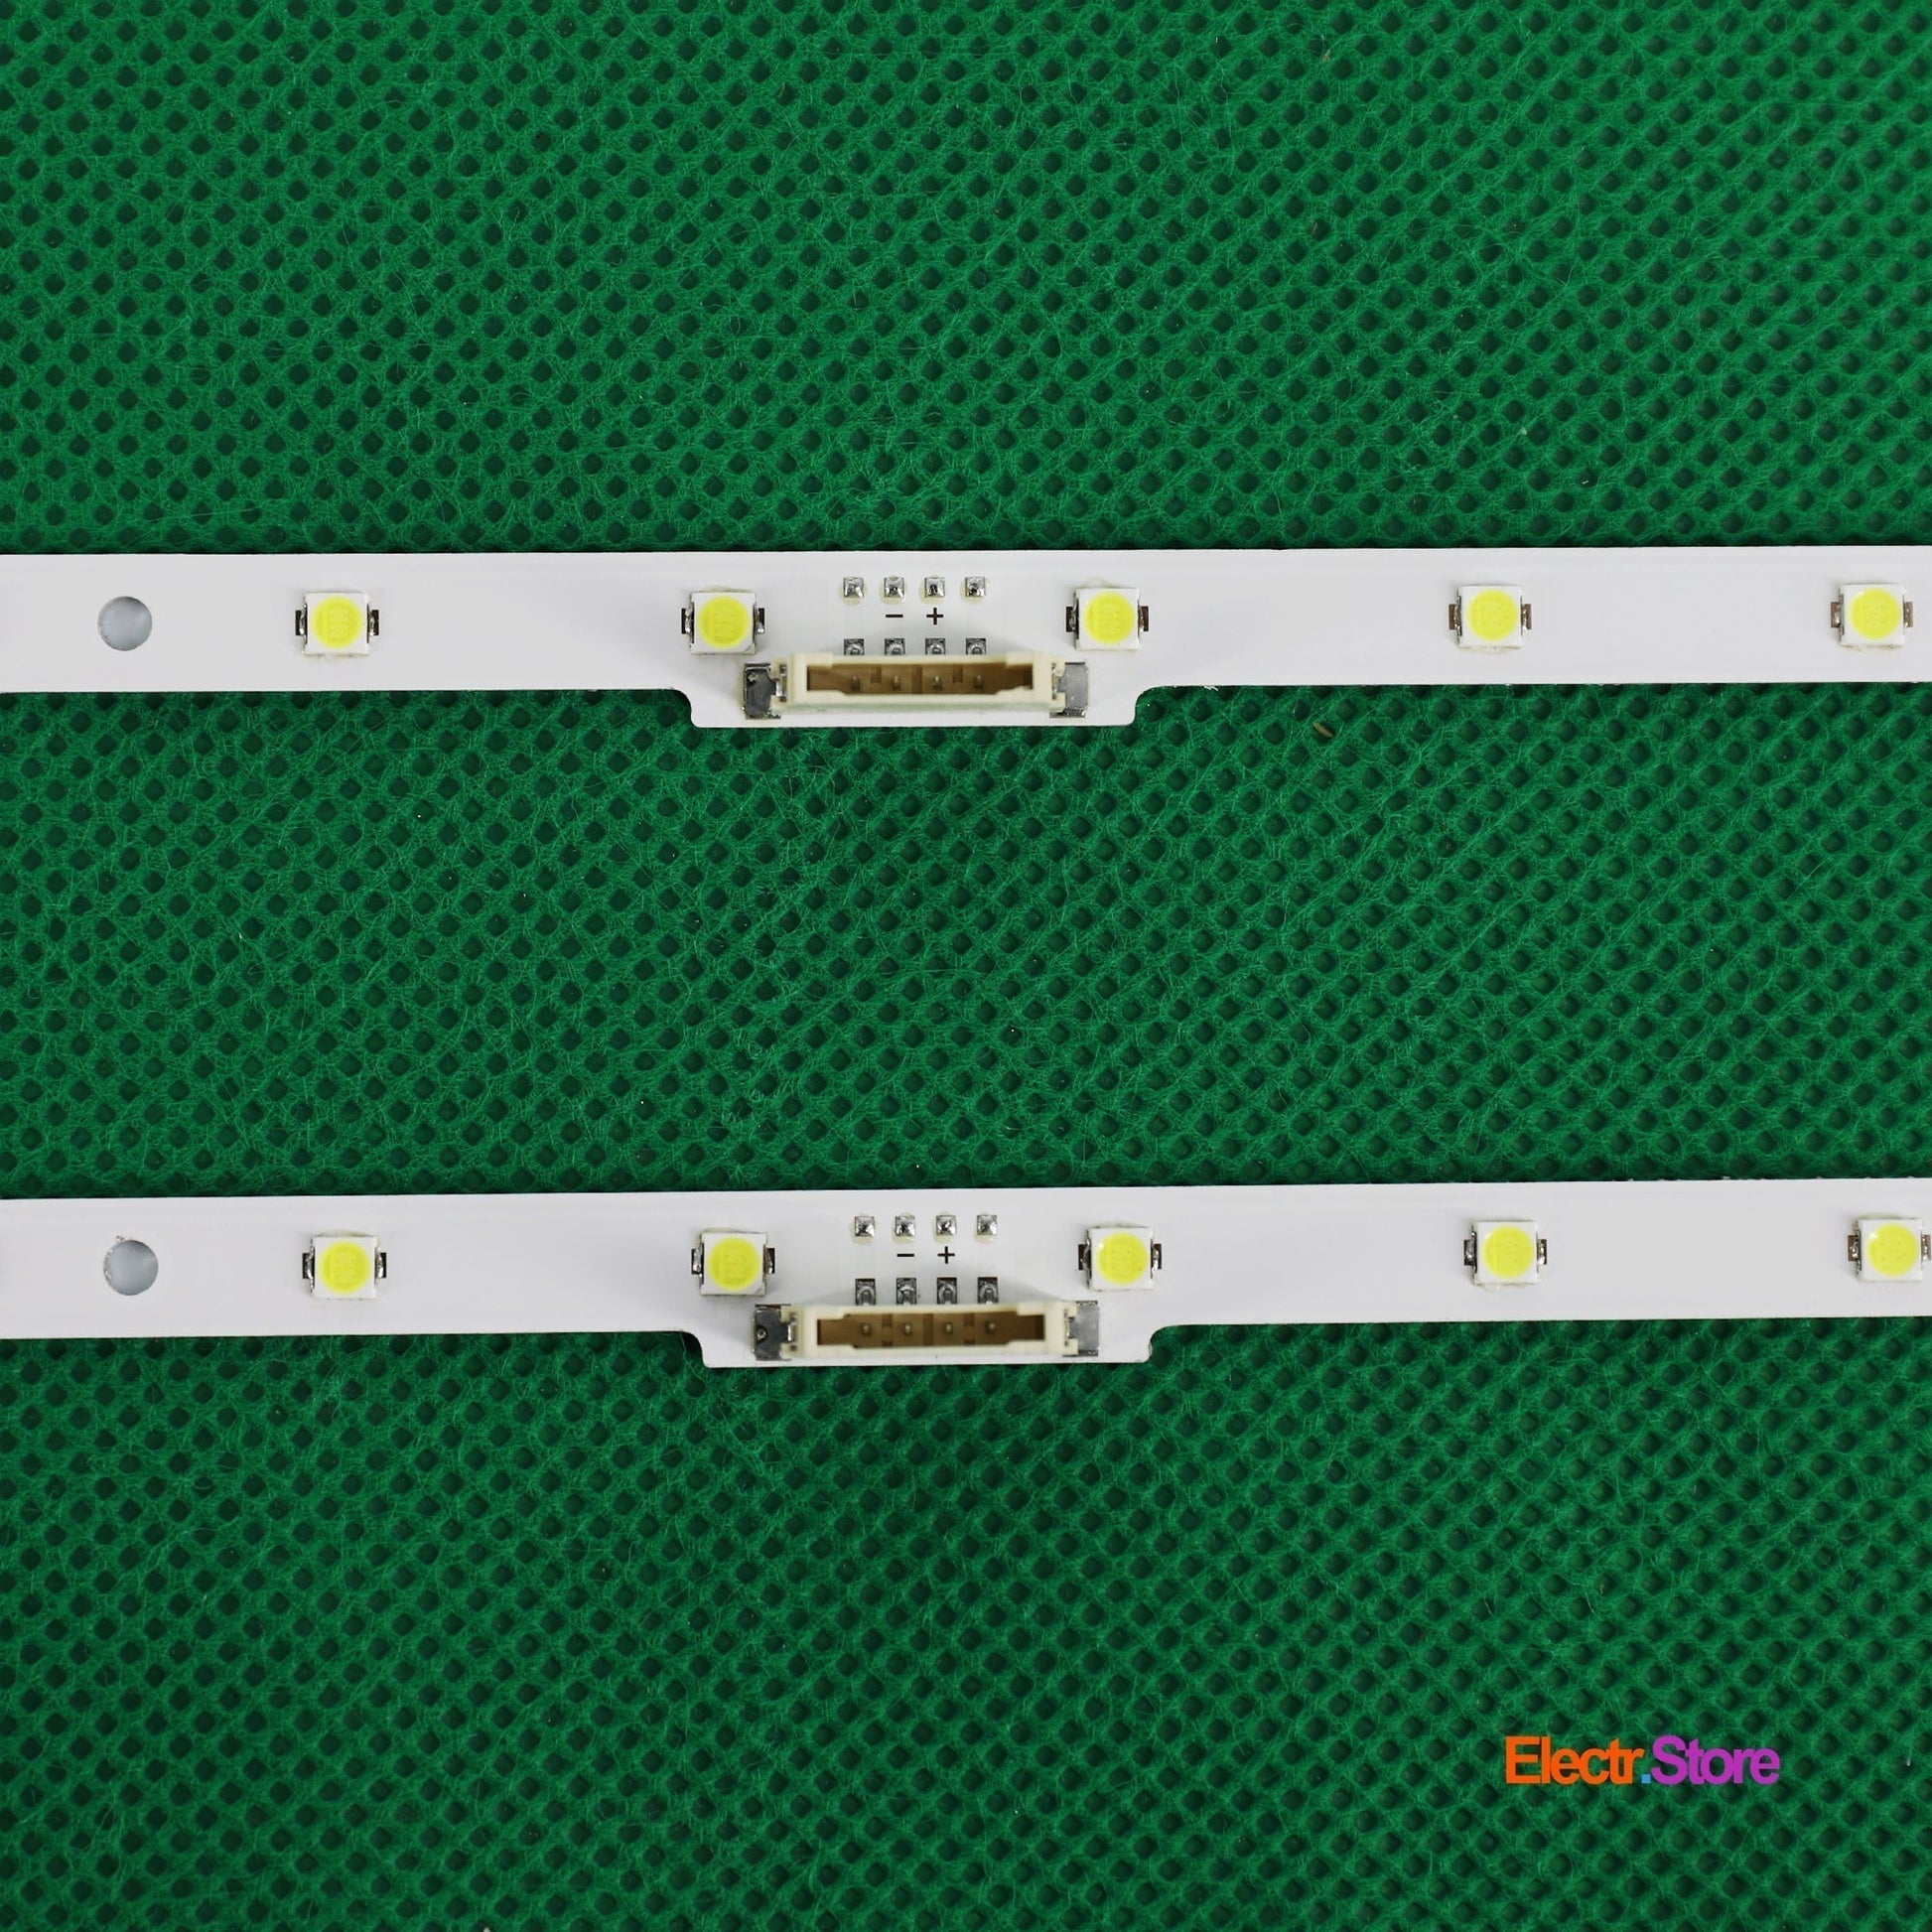 LED Backlight Strip Kits, AOT_40_NU7100F, LM41-00550A, LM41-00549A, BN96-45955A, 2X23LED (2 pcs/kit), for TV 40" SAMSUNG: UE40NU7180UXZG, UE40NU7180UXZT, UE40NU7182UXXH, UE40NU7189UXZG 40" LED Backlights LM41-00550A Samsung Electr.Store